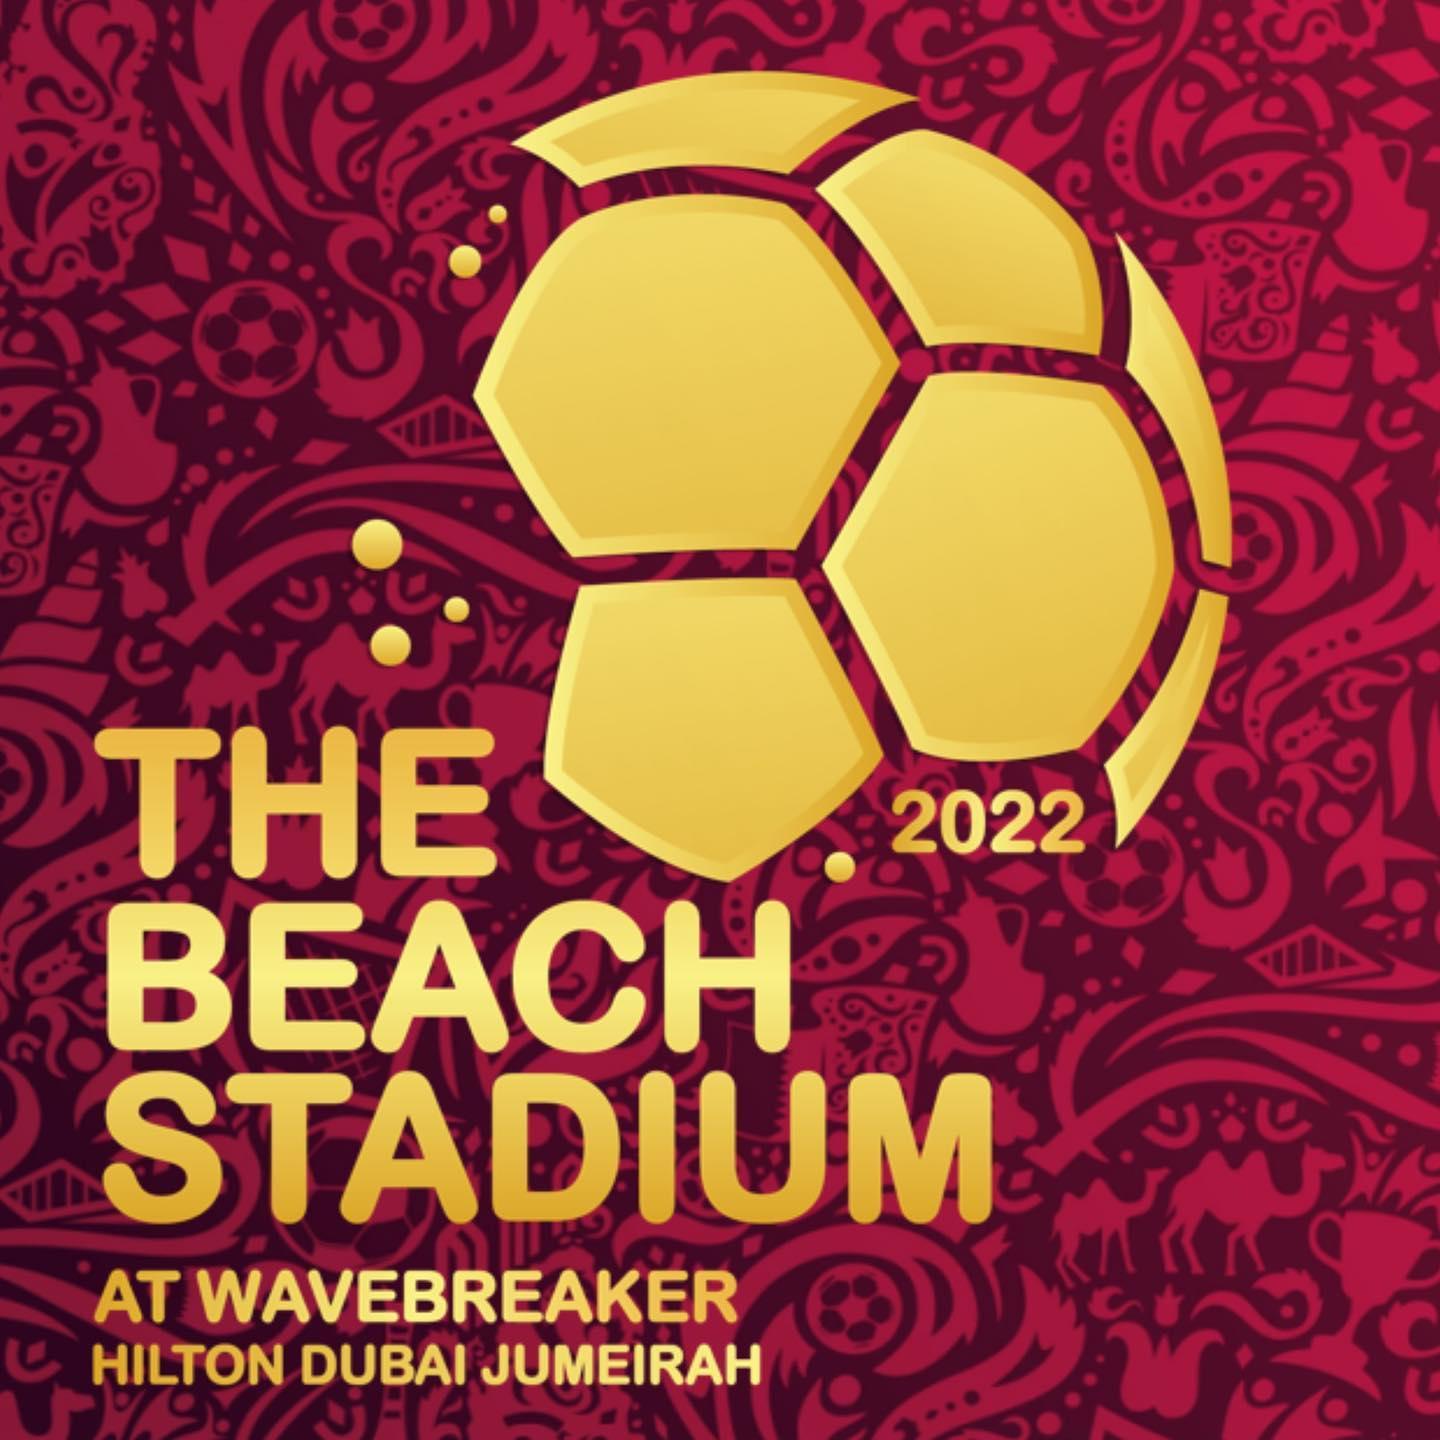 World Cup 2022 at Wavebreaker: France vs Australia